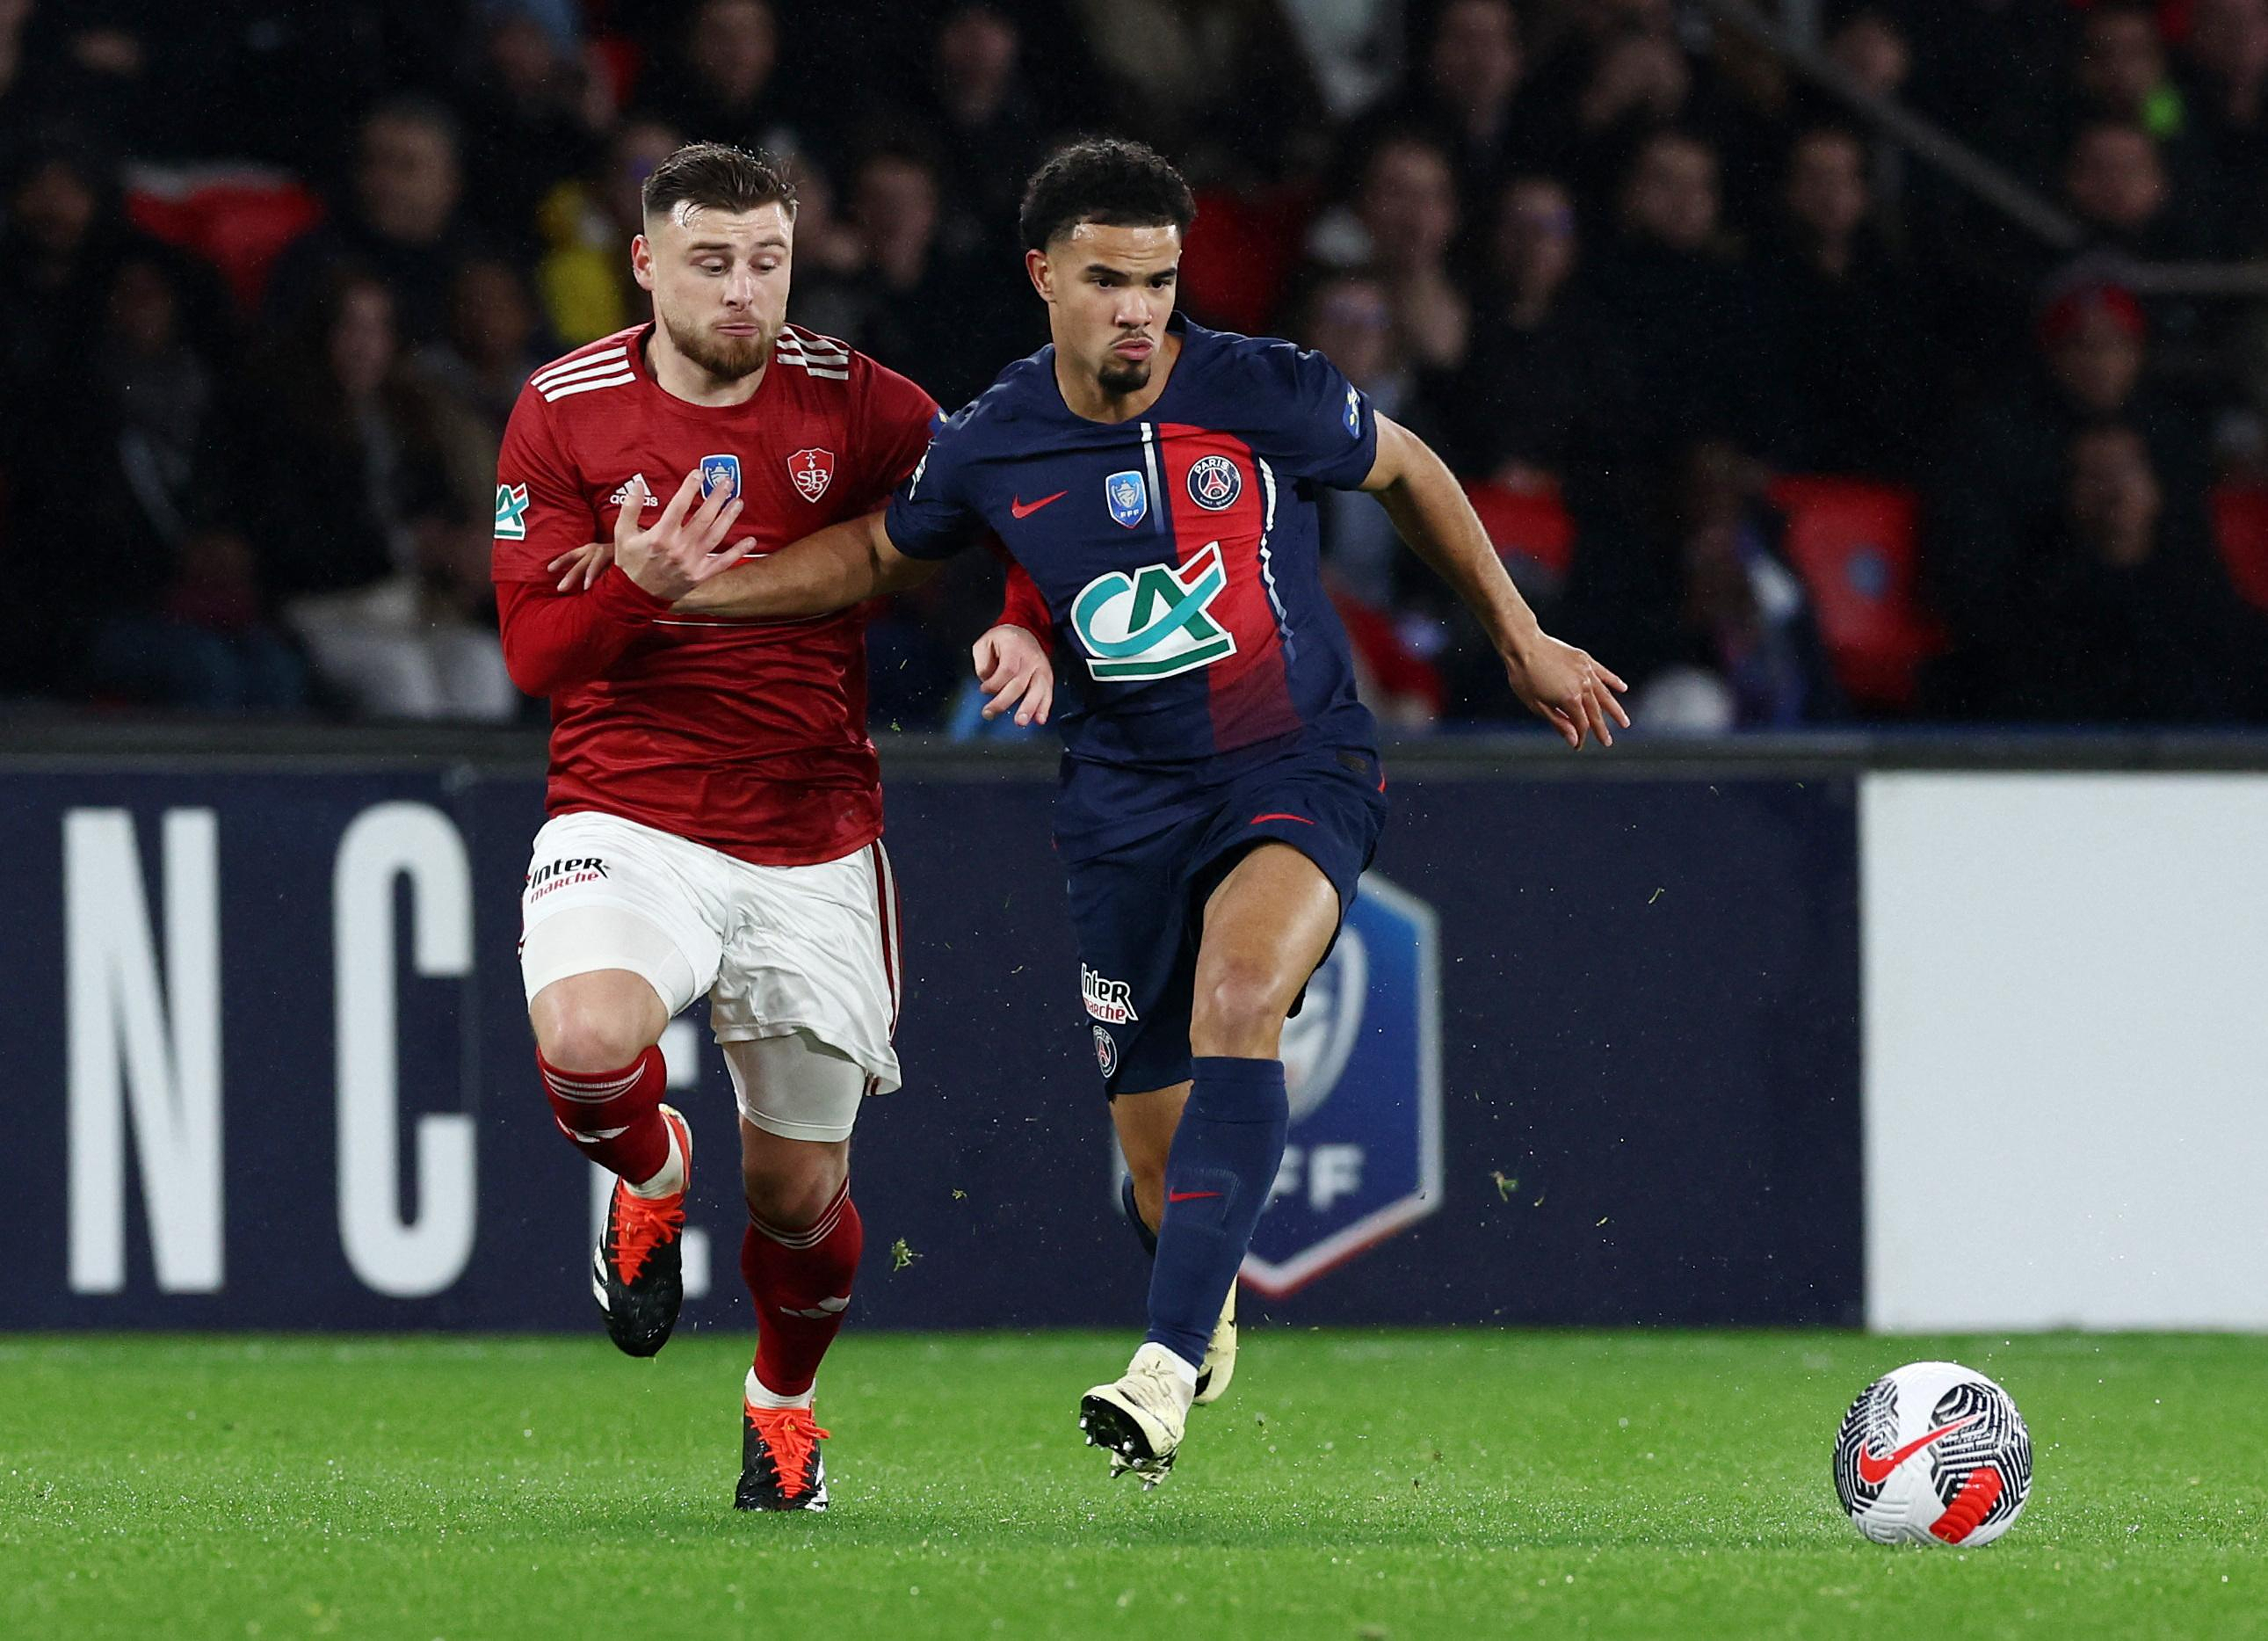 Coupe de France: “It’s not an untouchable Paris, they have flaws,” notes Brestois Magnetti